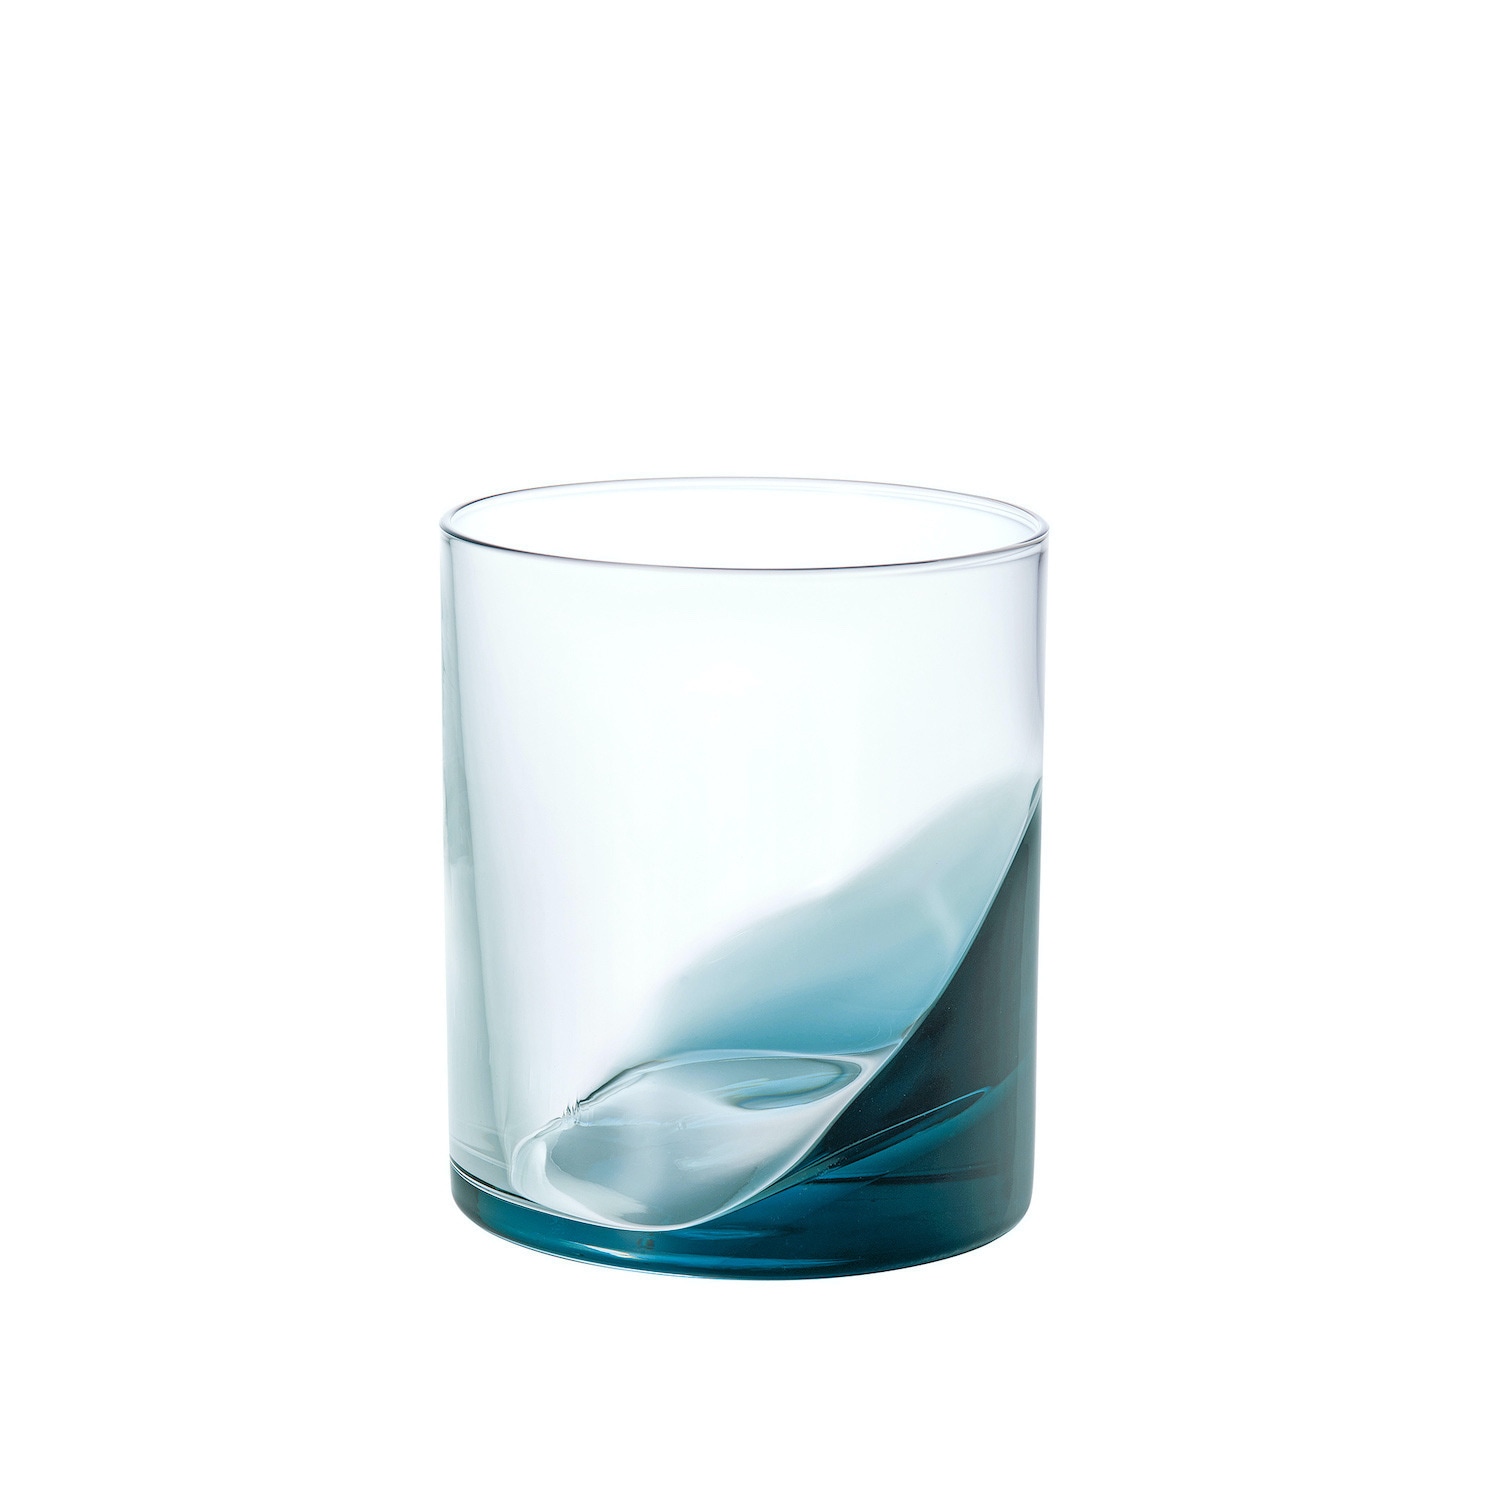 Sghr Sugahara Nozomi Old Fashioned Glass - Blue